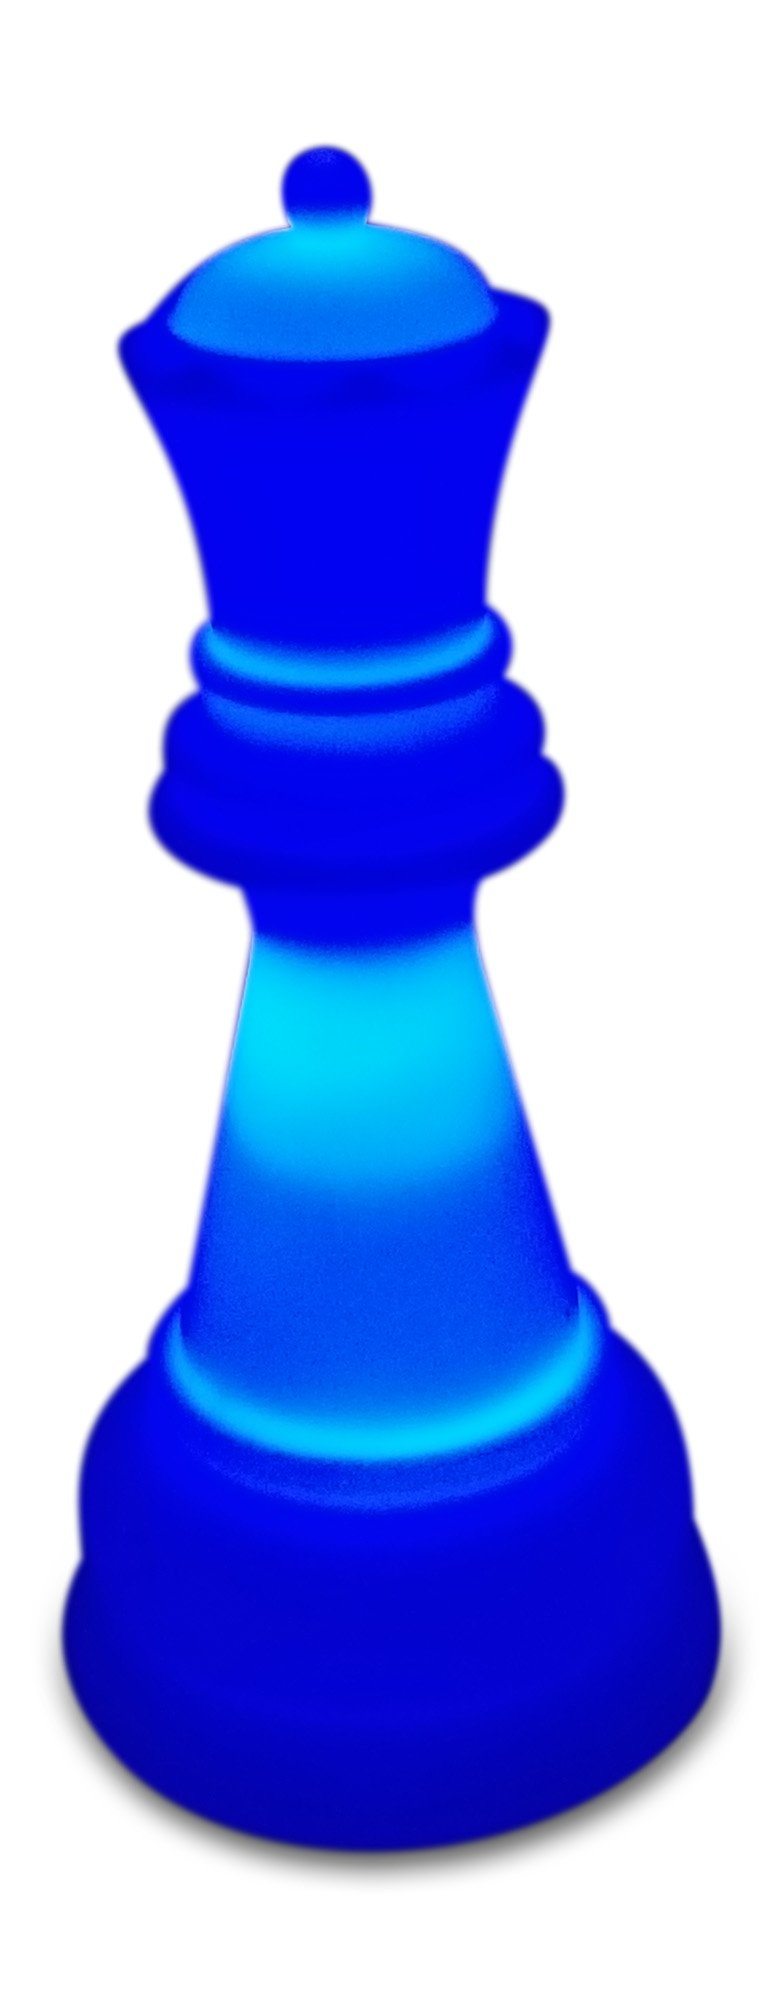 MegaChess 31 Inch Perfect Queen Light-Up Giant Chess Piece - Blue | Default Title | MegaChess.com